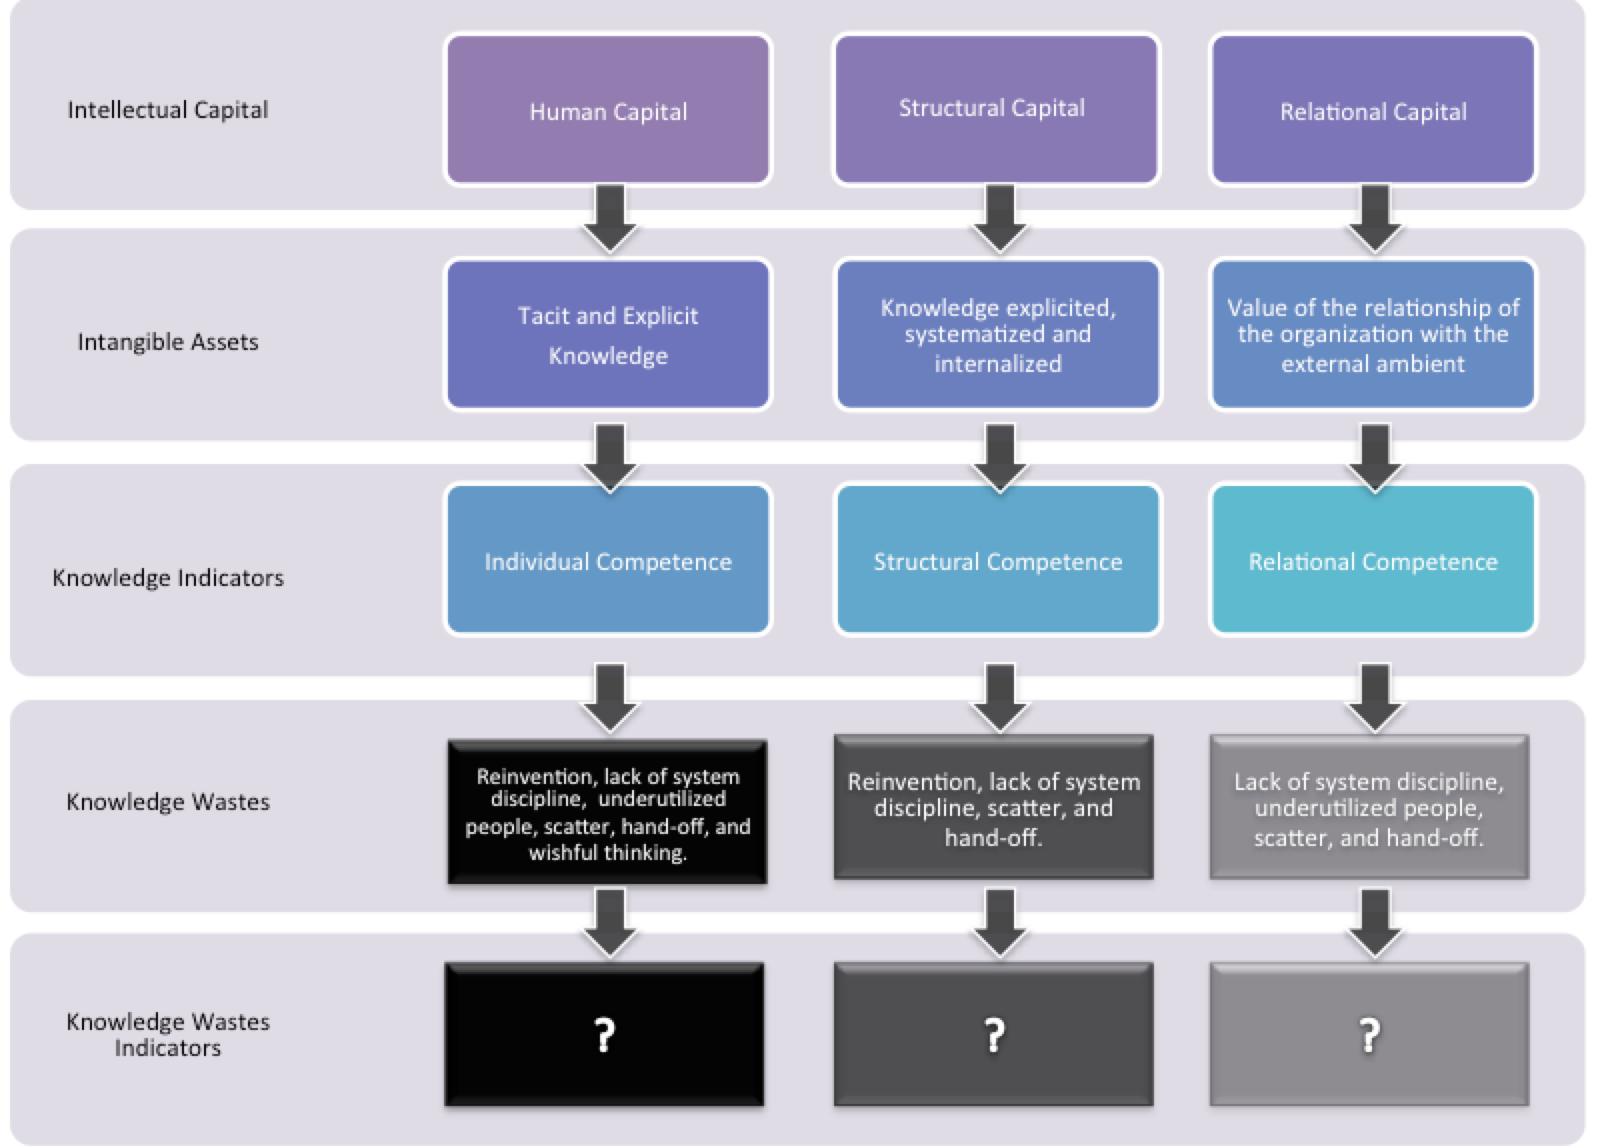 Figure 5 – Generic Conceptual Model - Knowledge Wastes Indicators Path